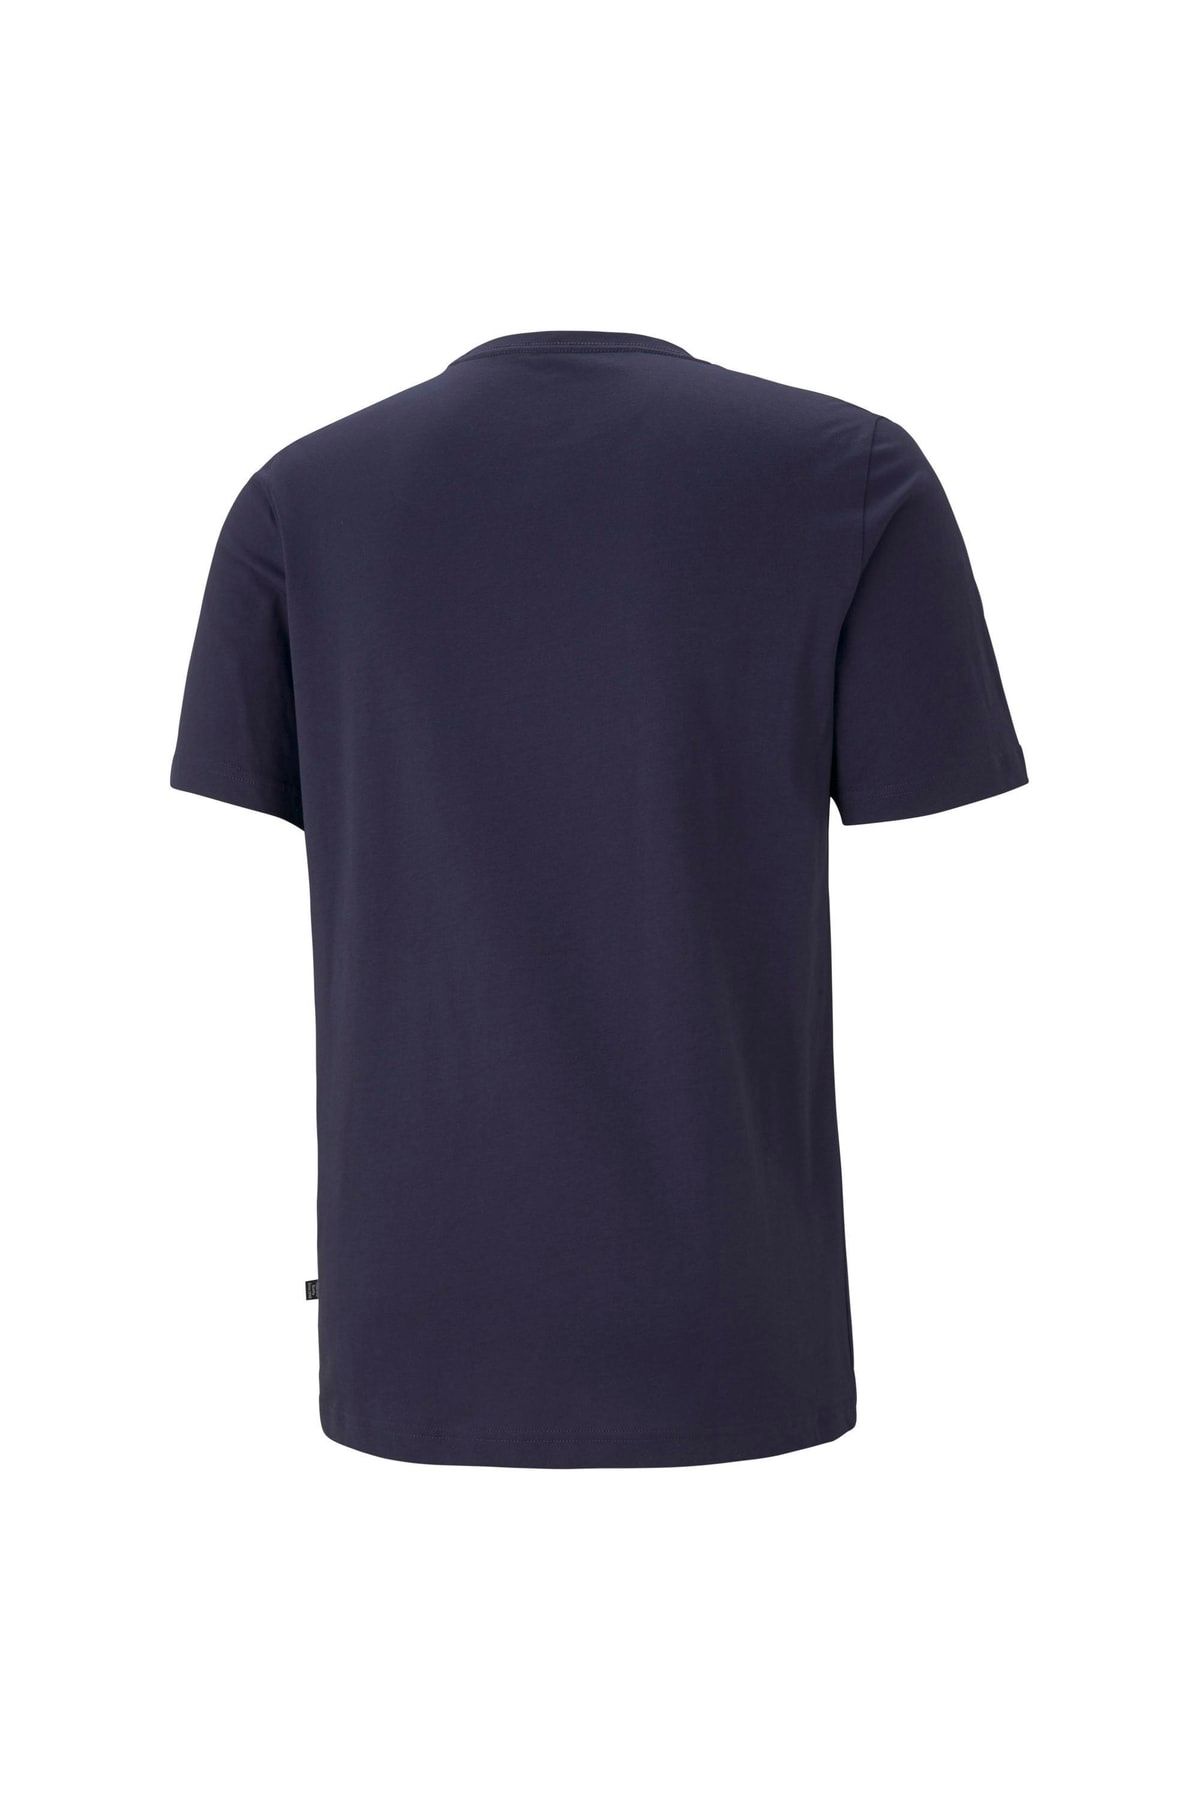 Puma ESS Small Logo Tee - Navy Blue Men's T-Shirt - Trendyol